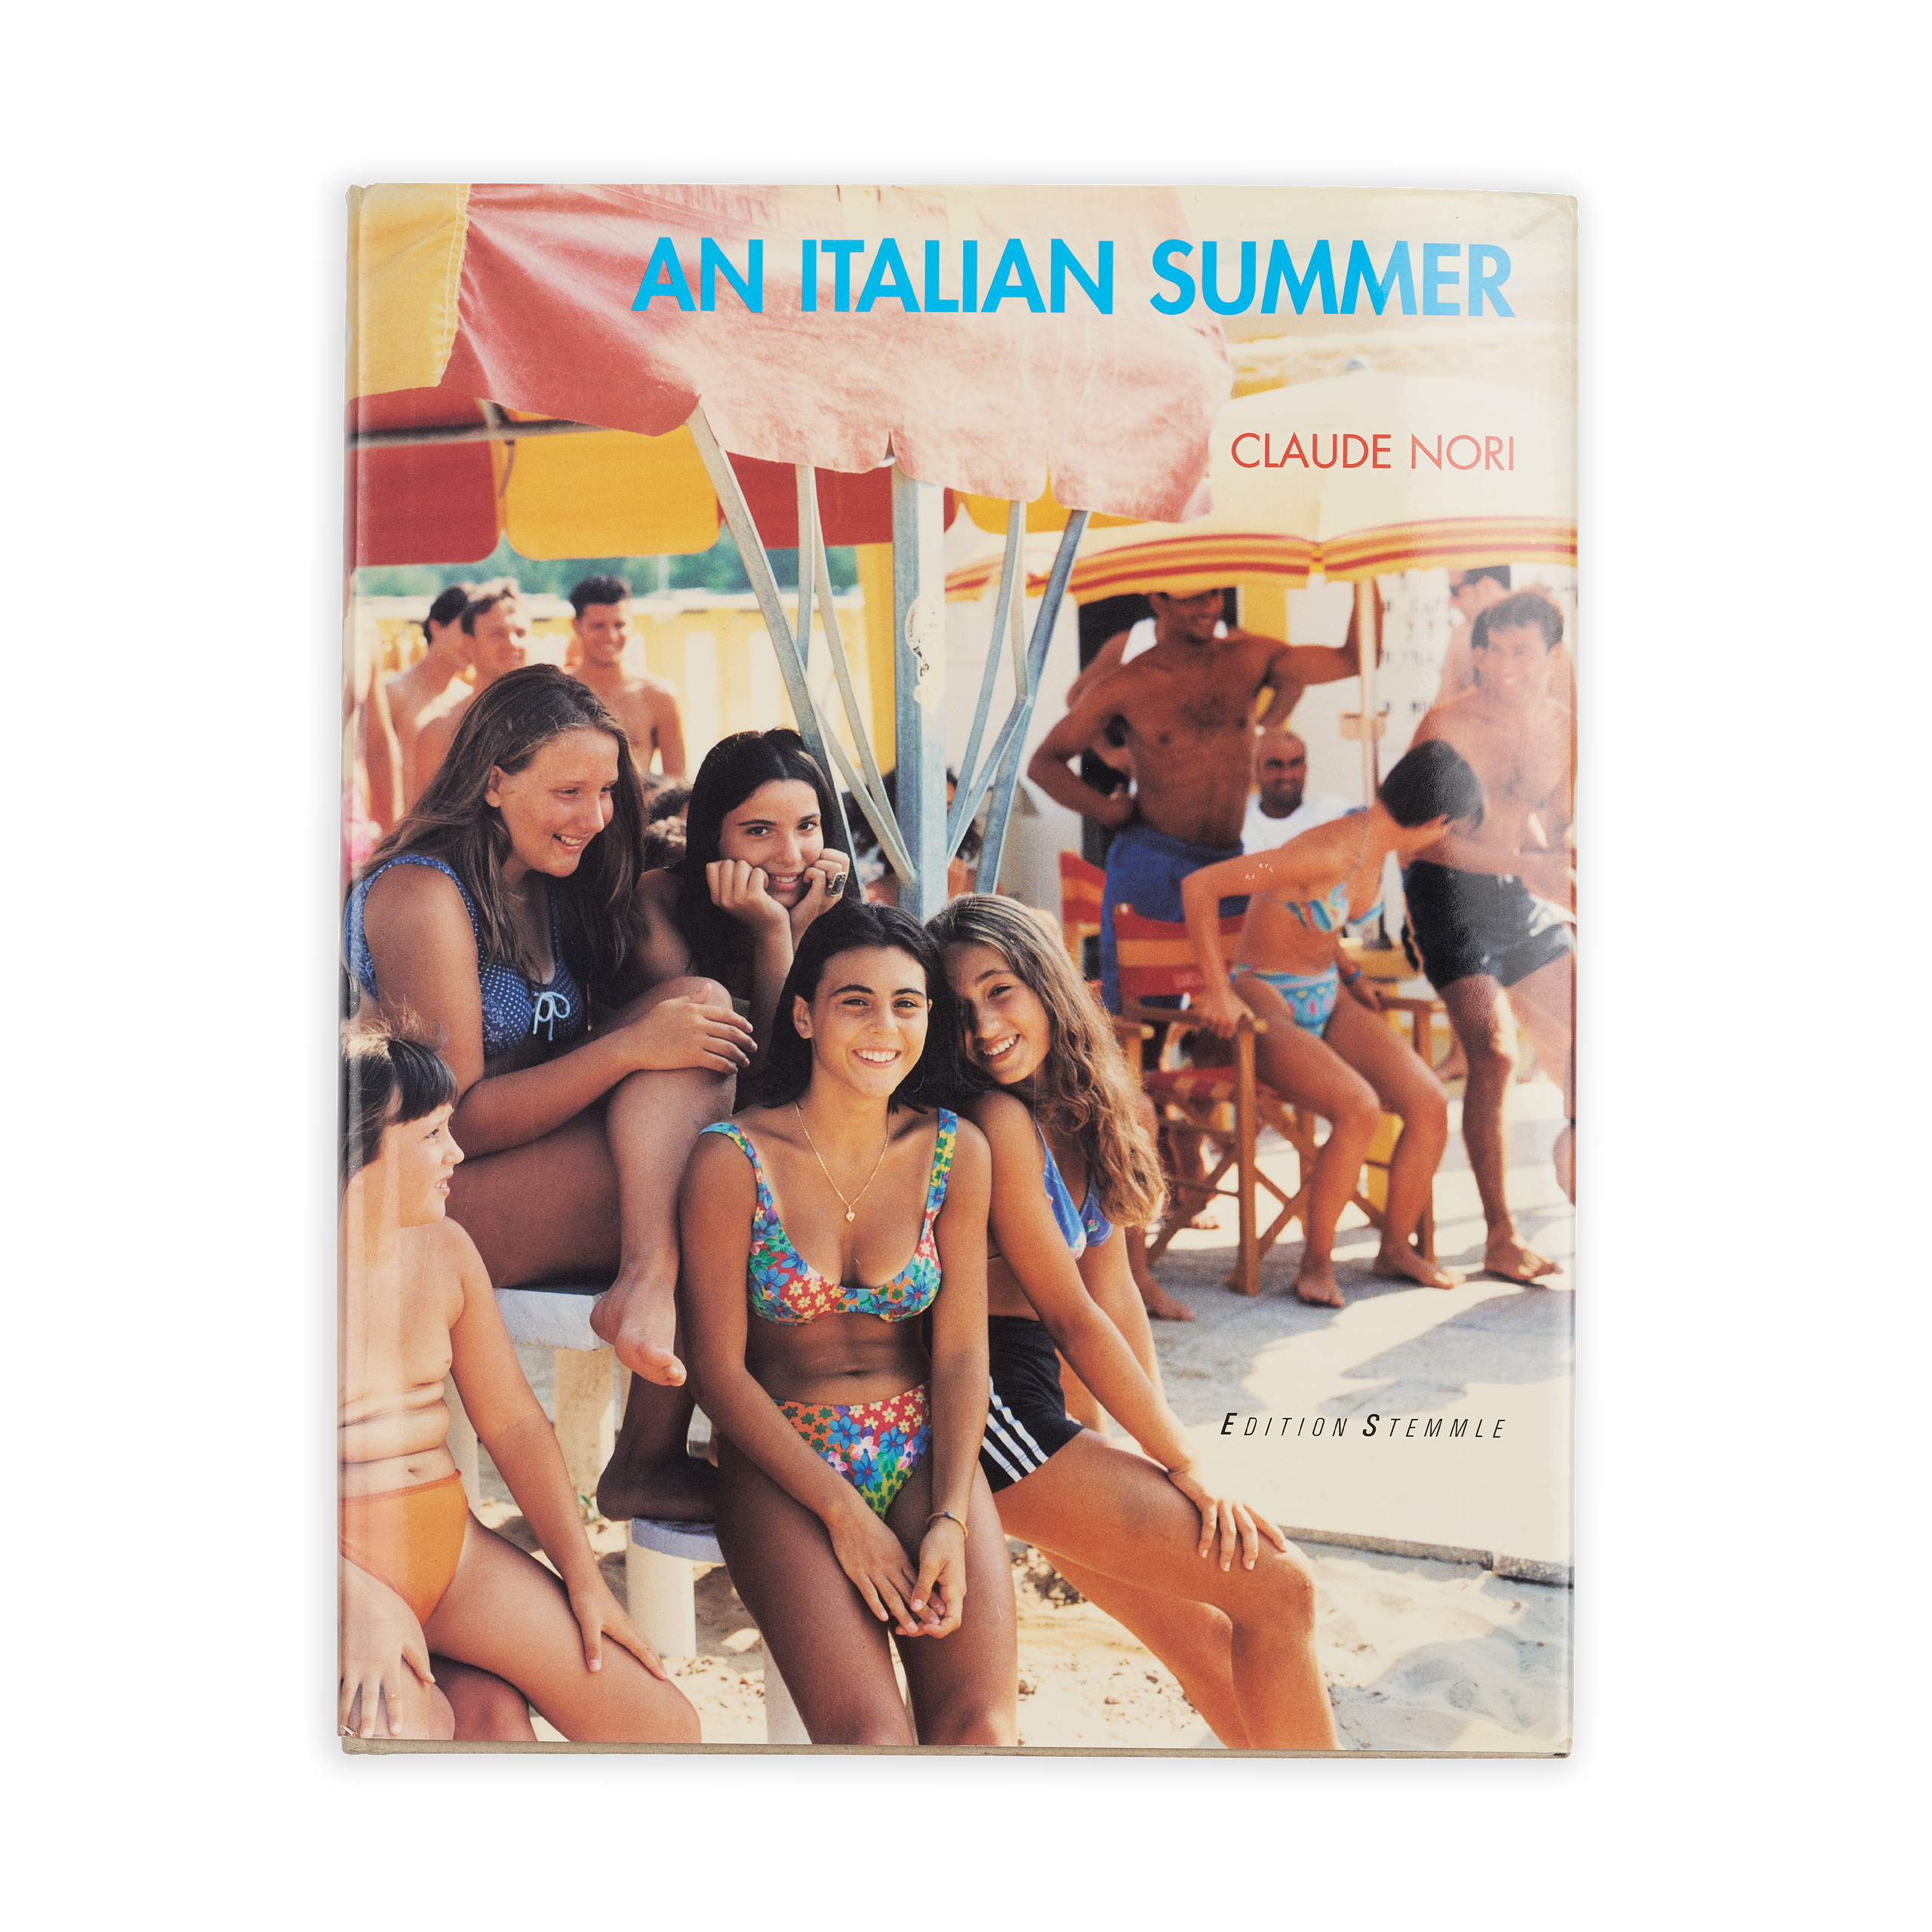 An Italian Summer by Claude Nori